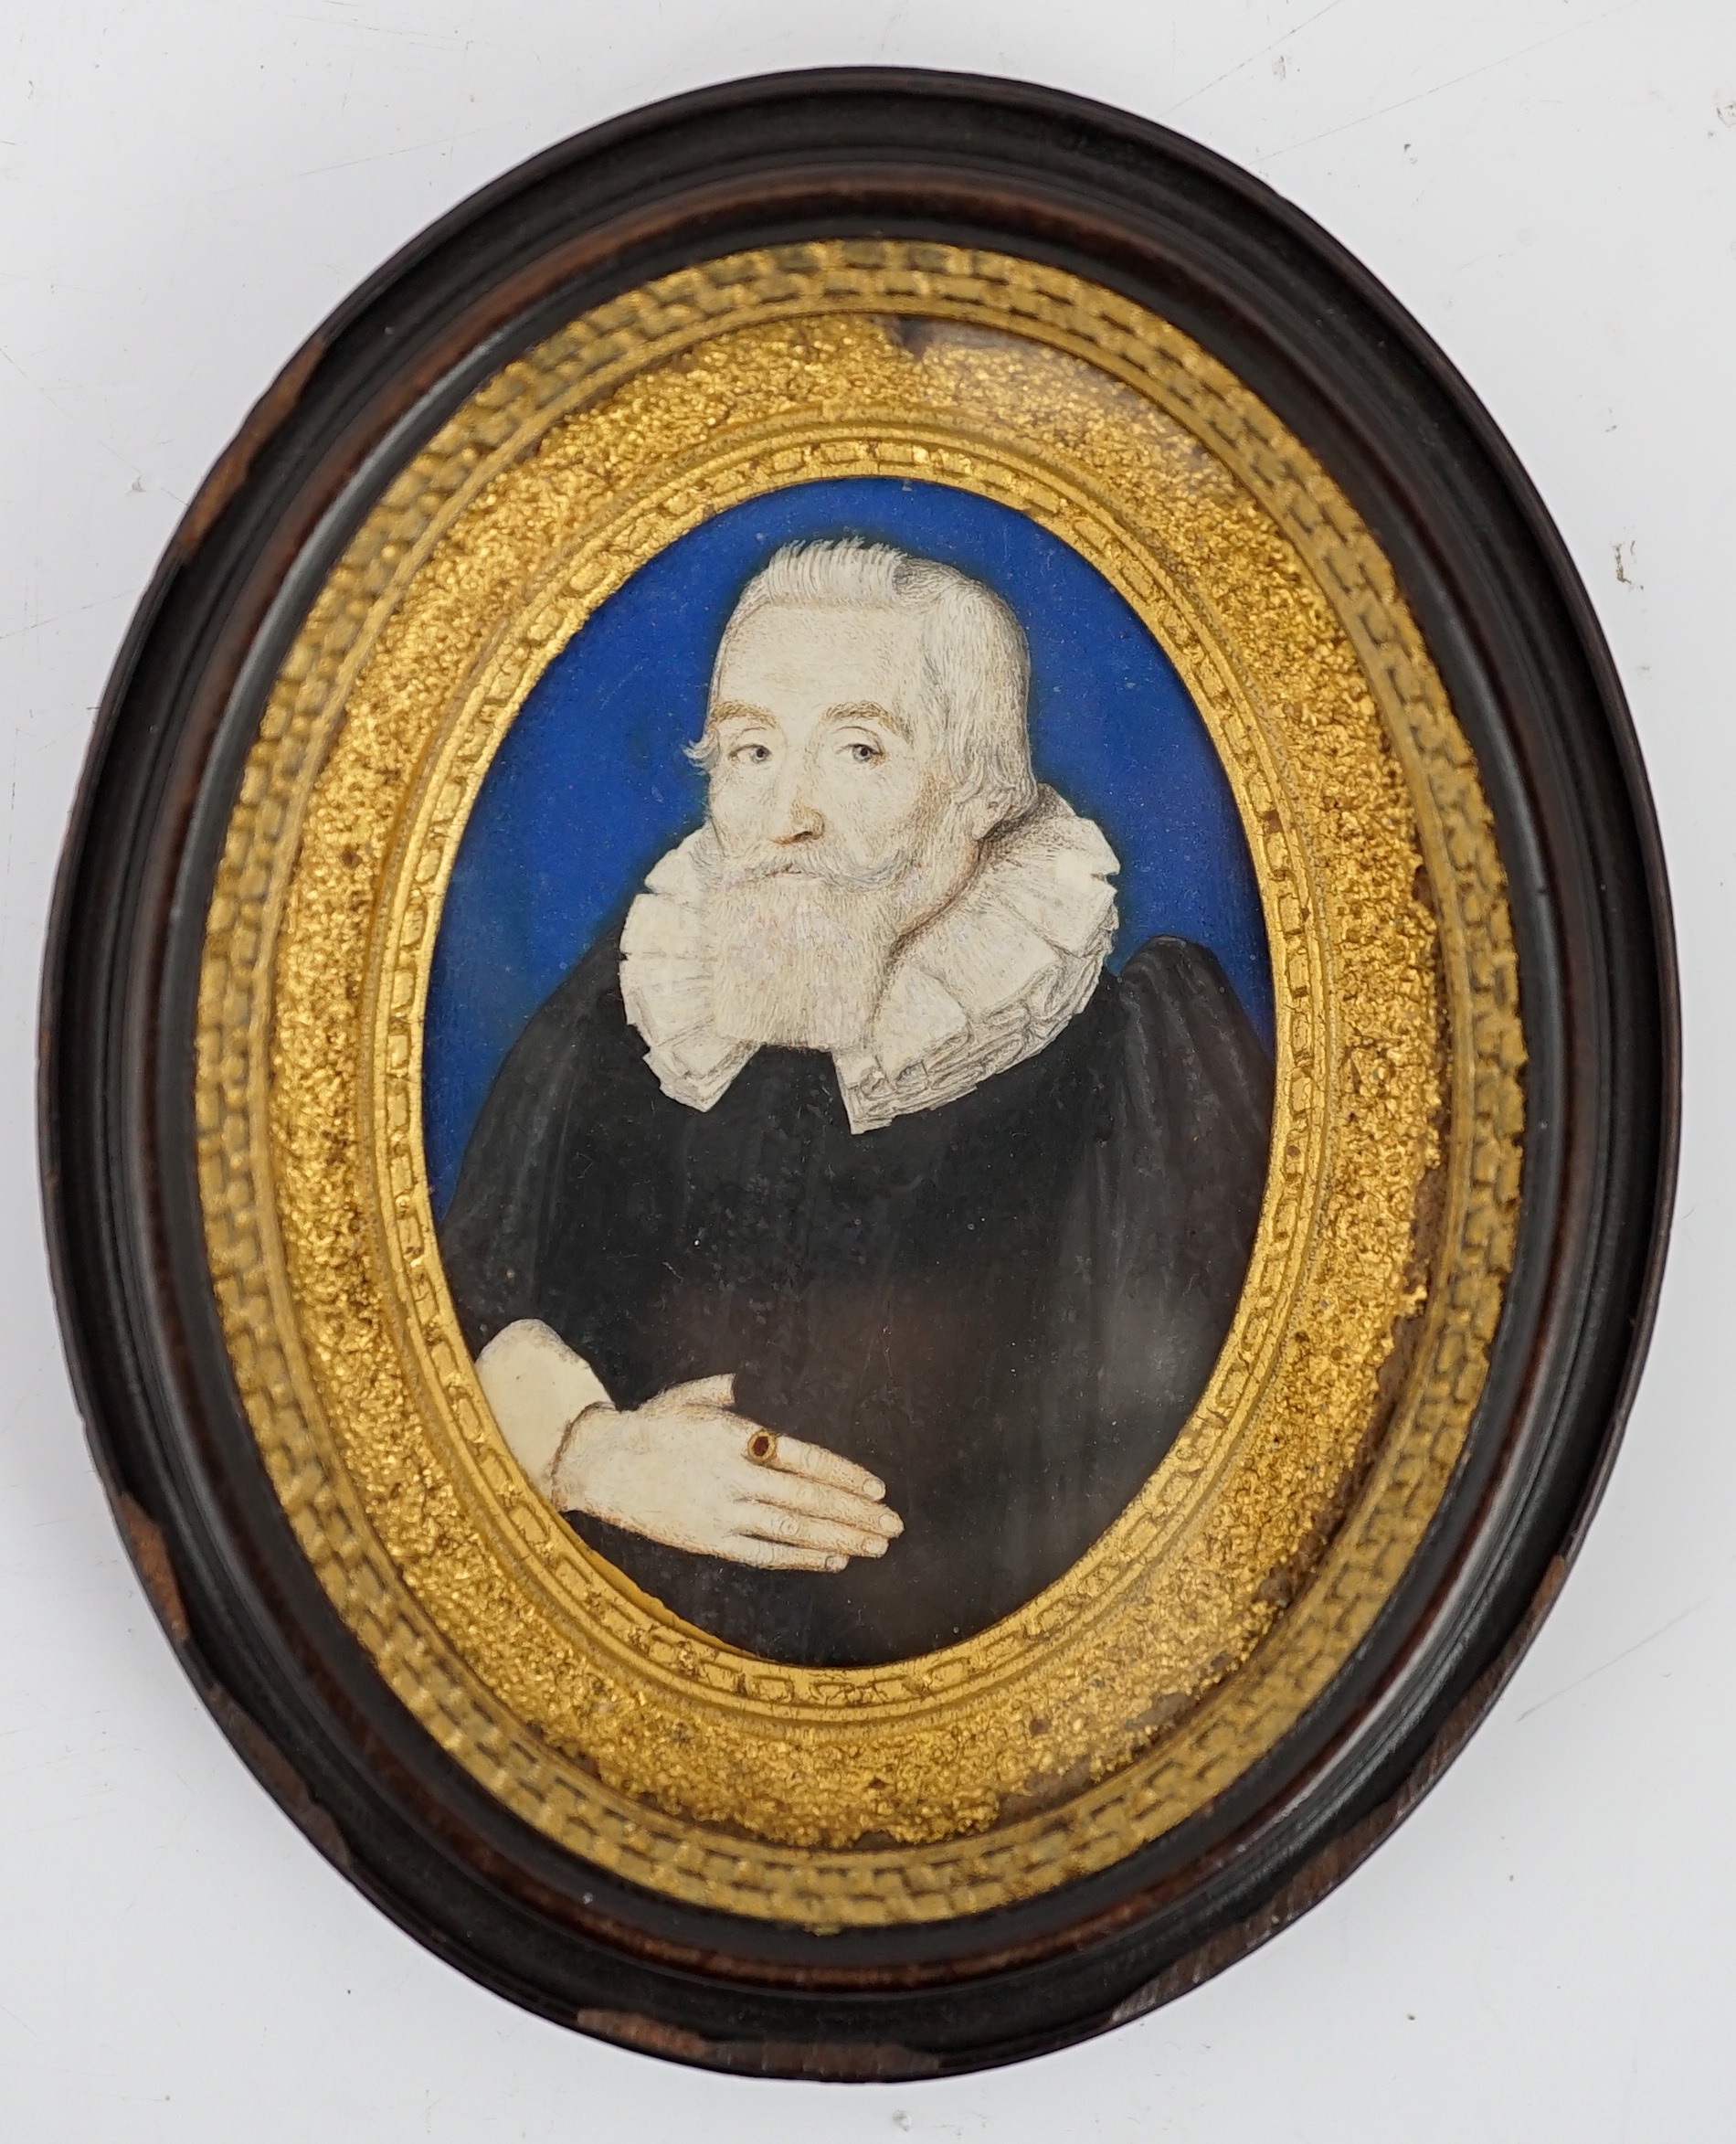 Attributed to Edward Norgate (British, 1581-1650), Portrait miniature of John Harrison Senior (1552-1628), watercolour on vellum, 5.7 x 4cm.